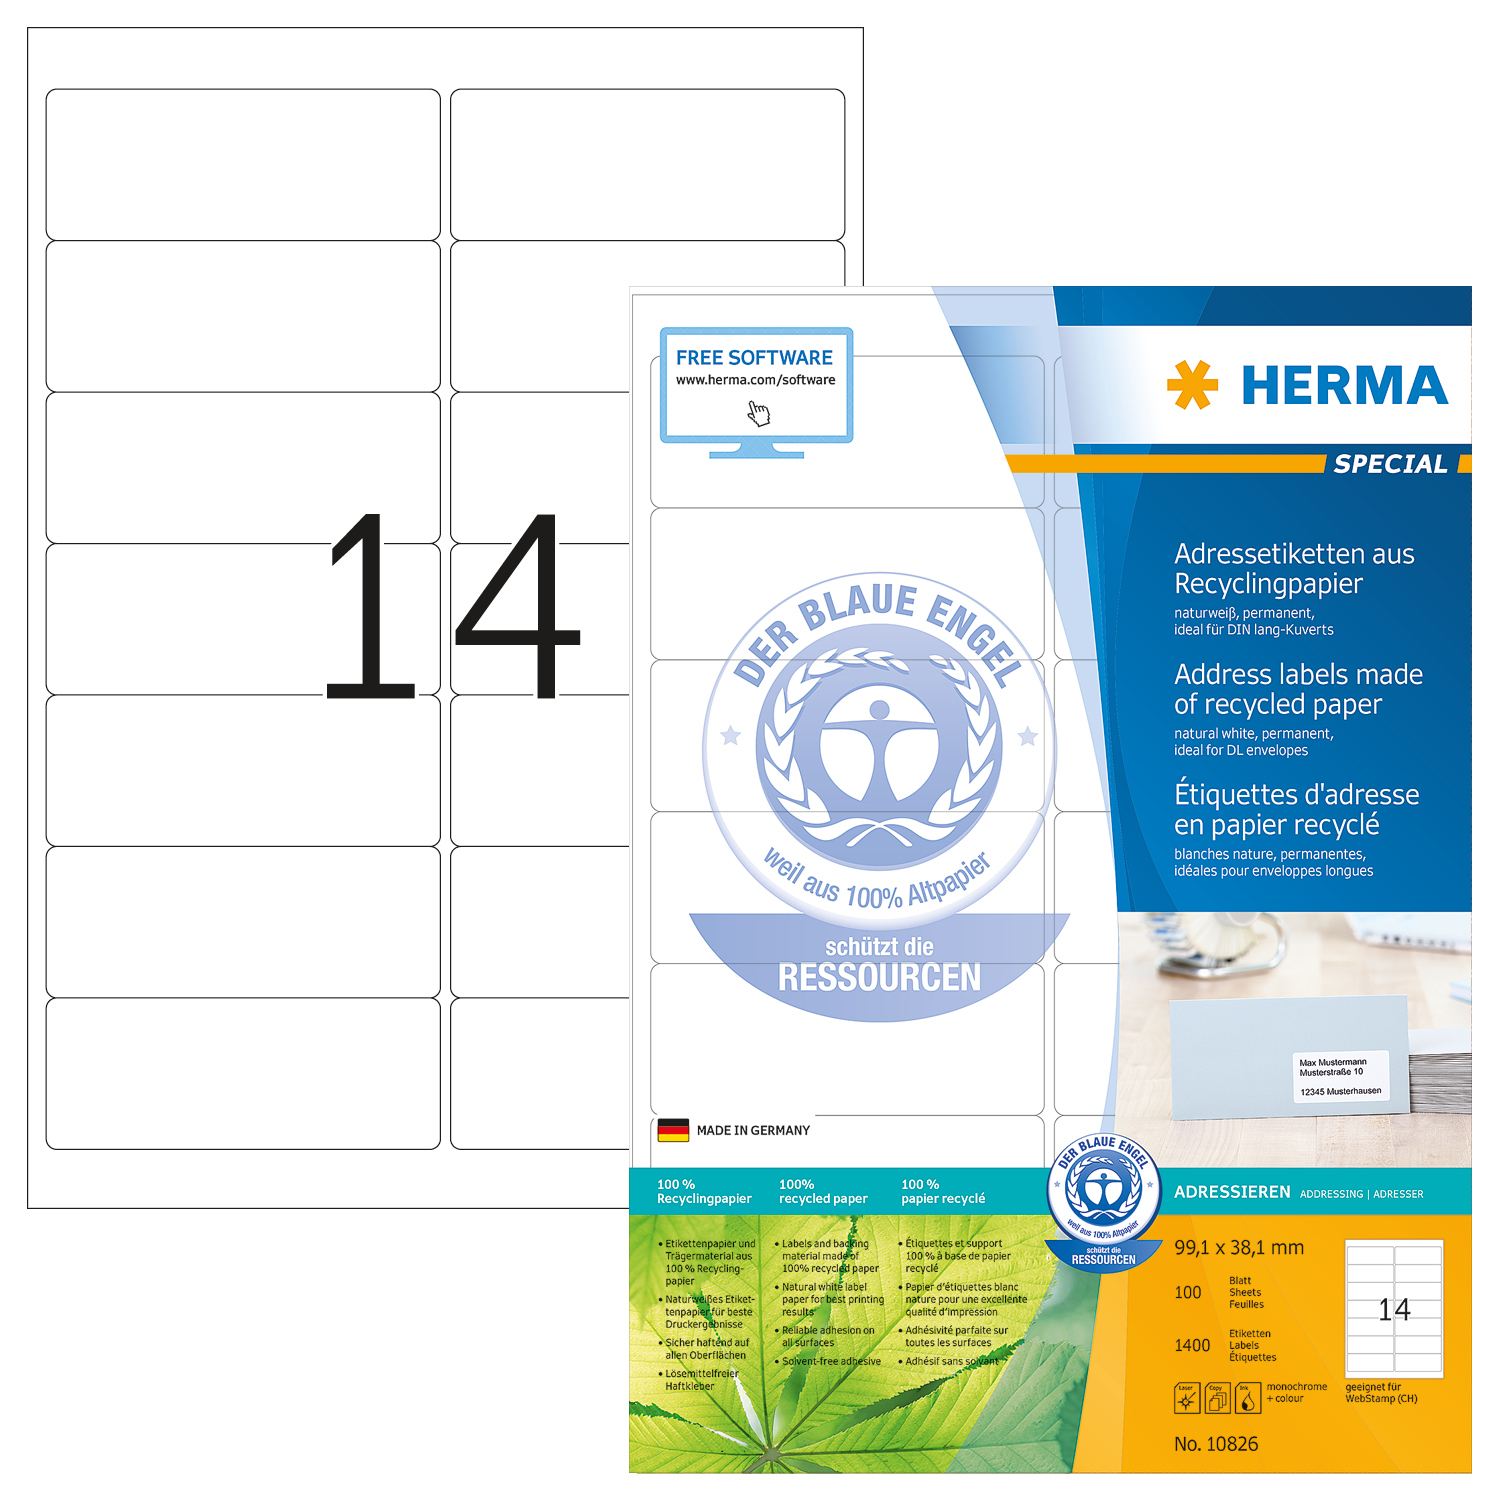 HERMA Etiquettes adress. 99,1x38,1mm 10826 recycling 1400 pcs.